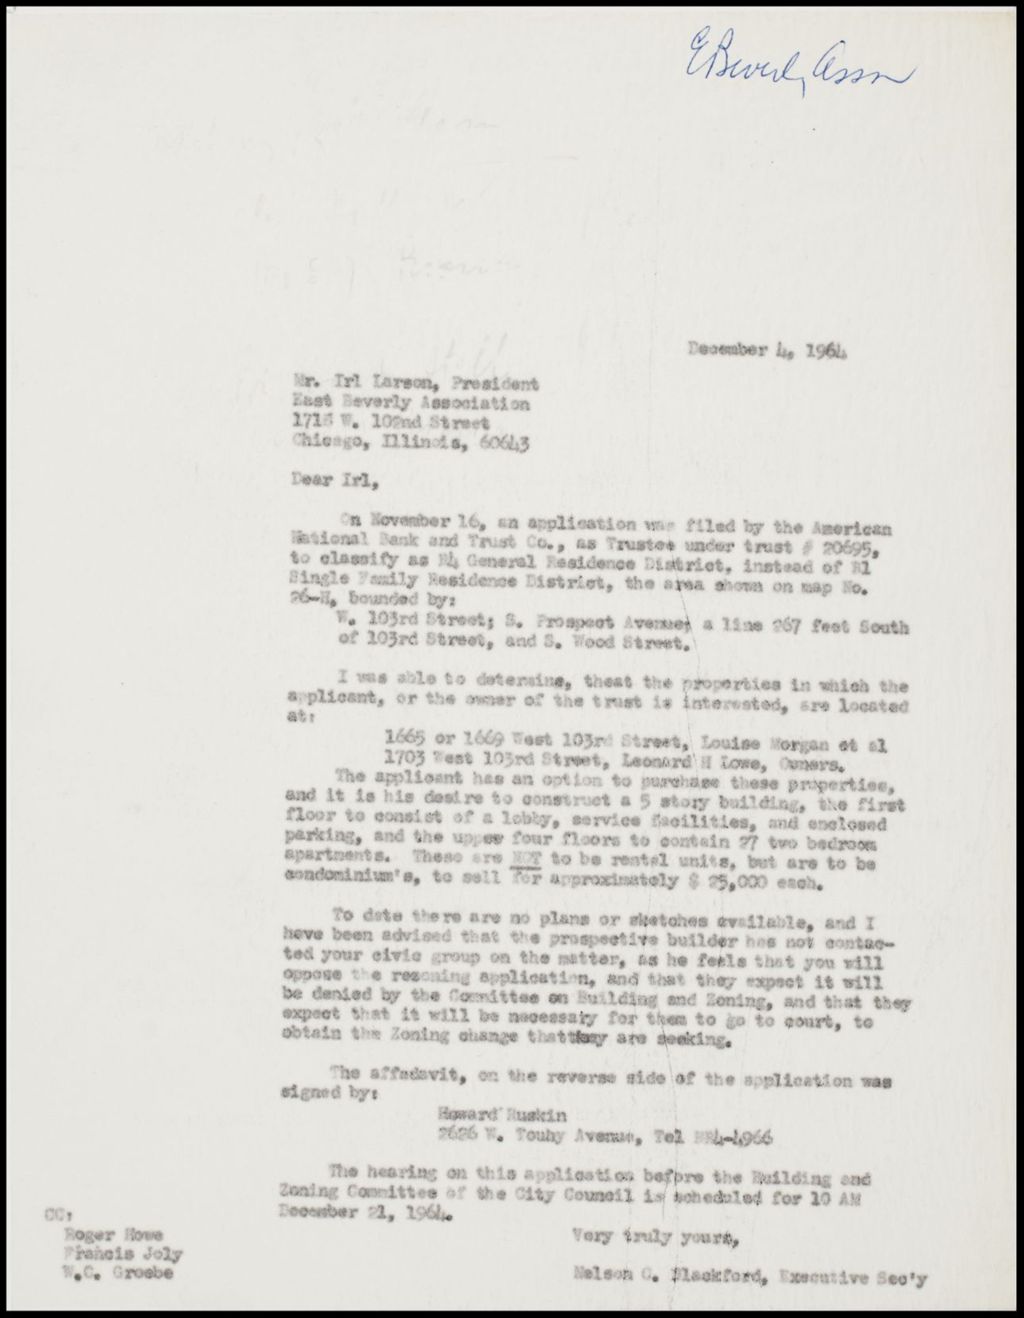 Miniature of East Beverly Association - correspondence, 1964-1966 (Folder 94)